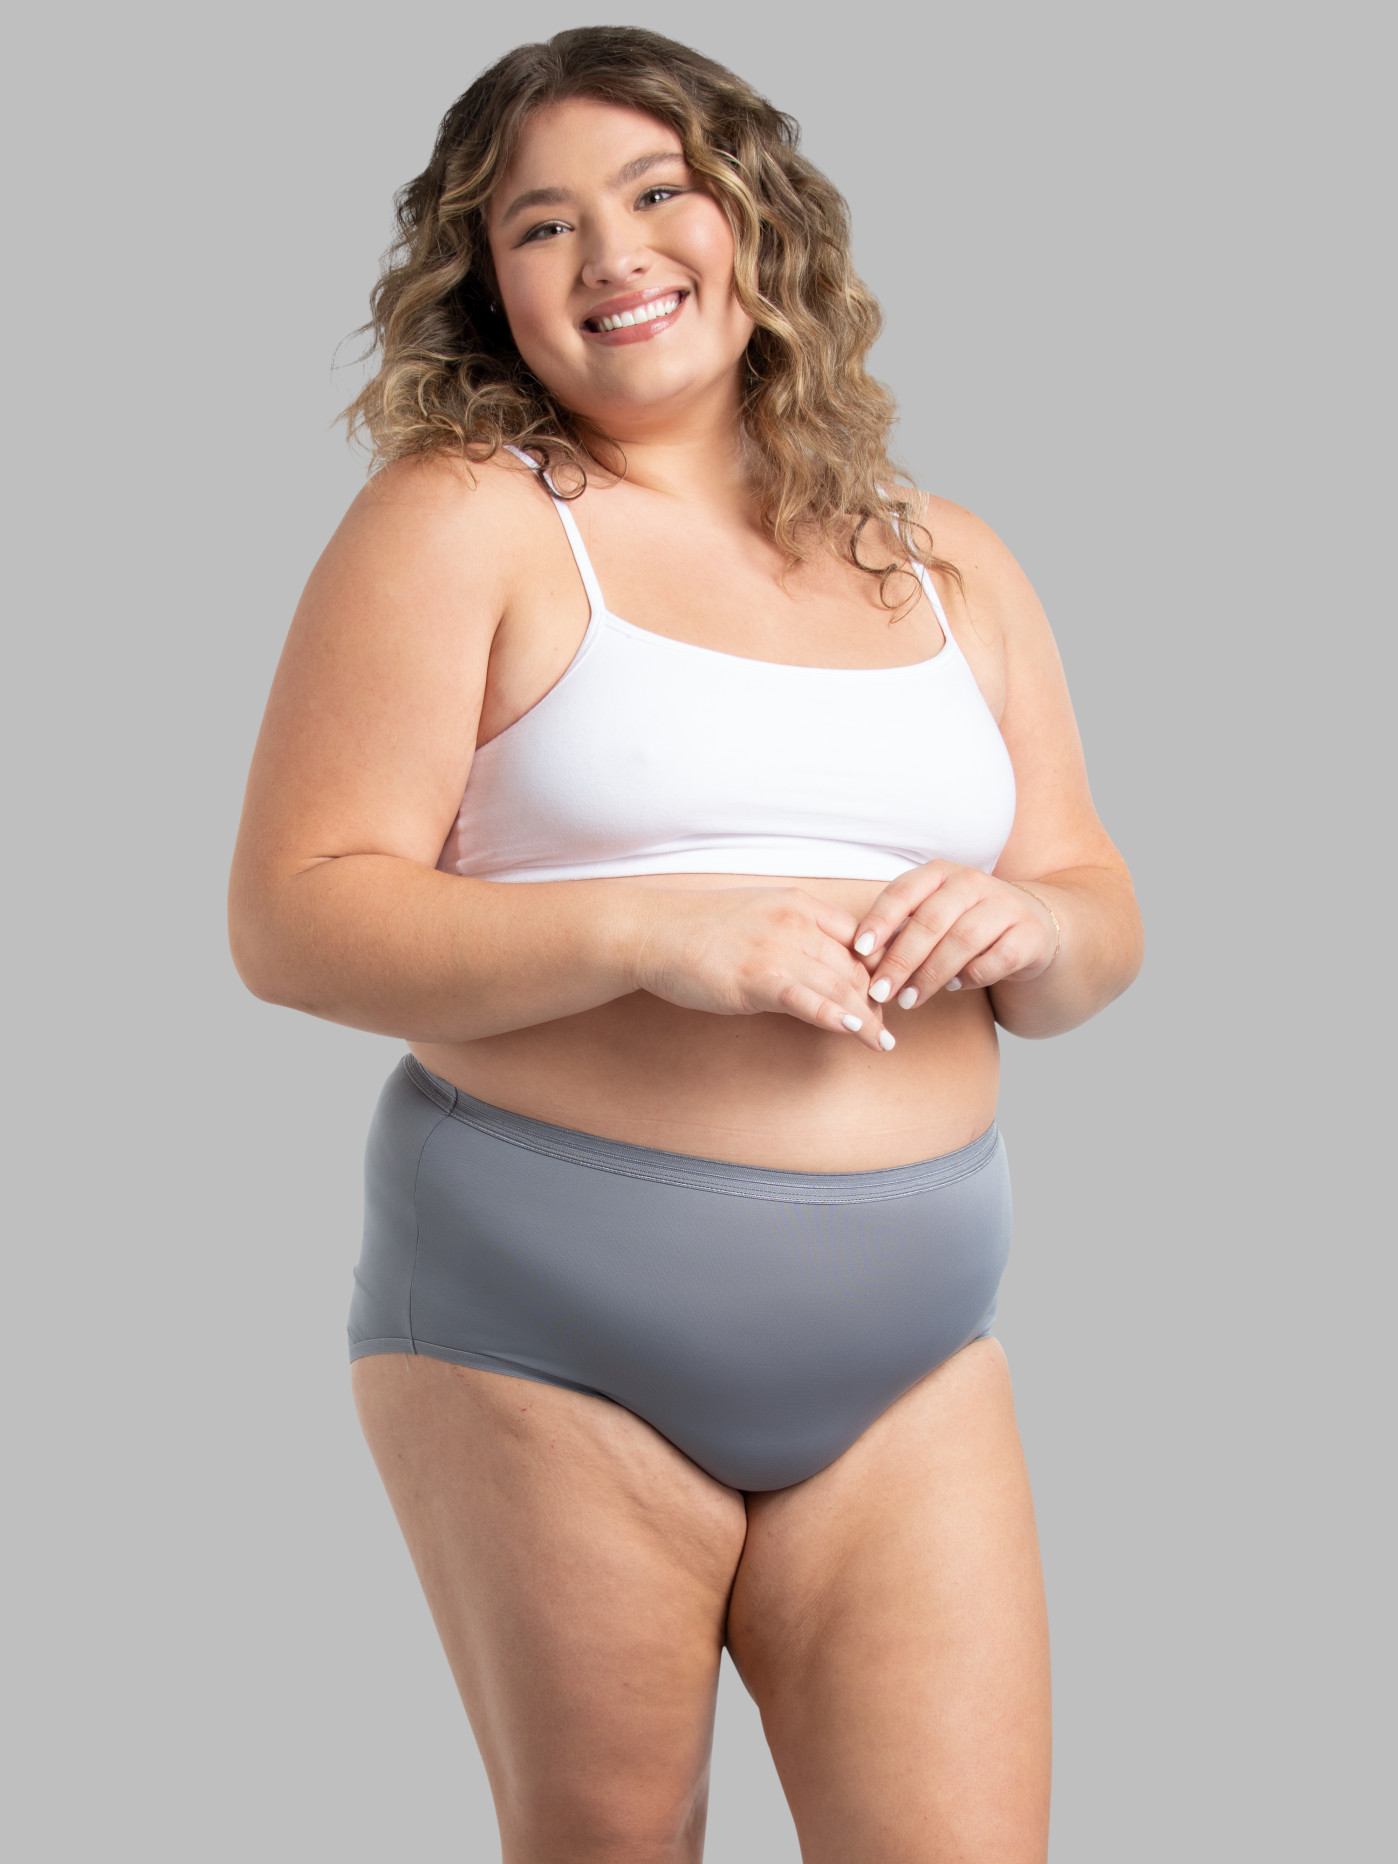 DREAMFIT Underwear for Women Plus Size Full Coverage Microfiber